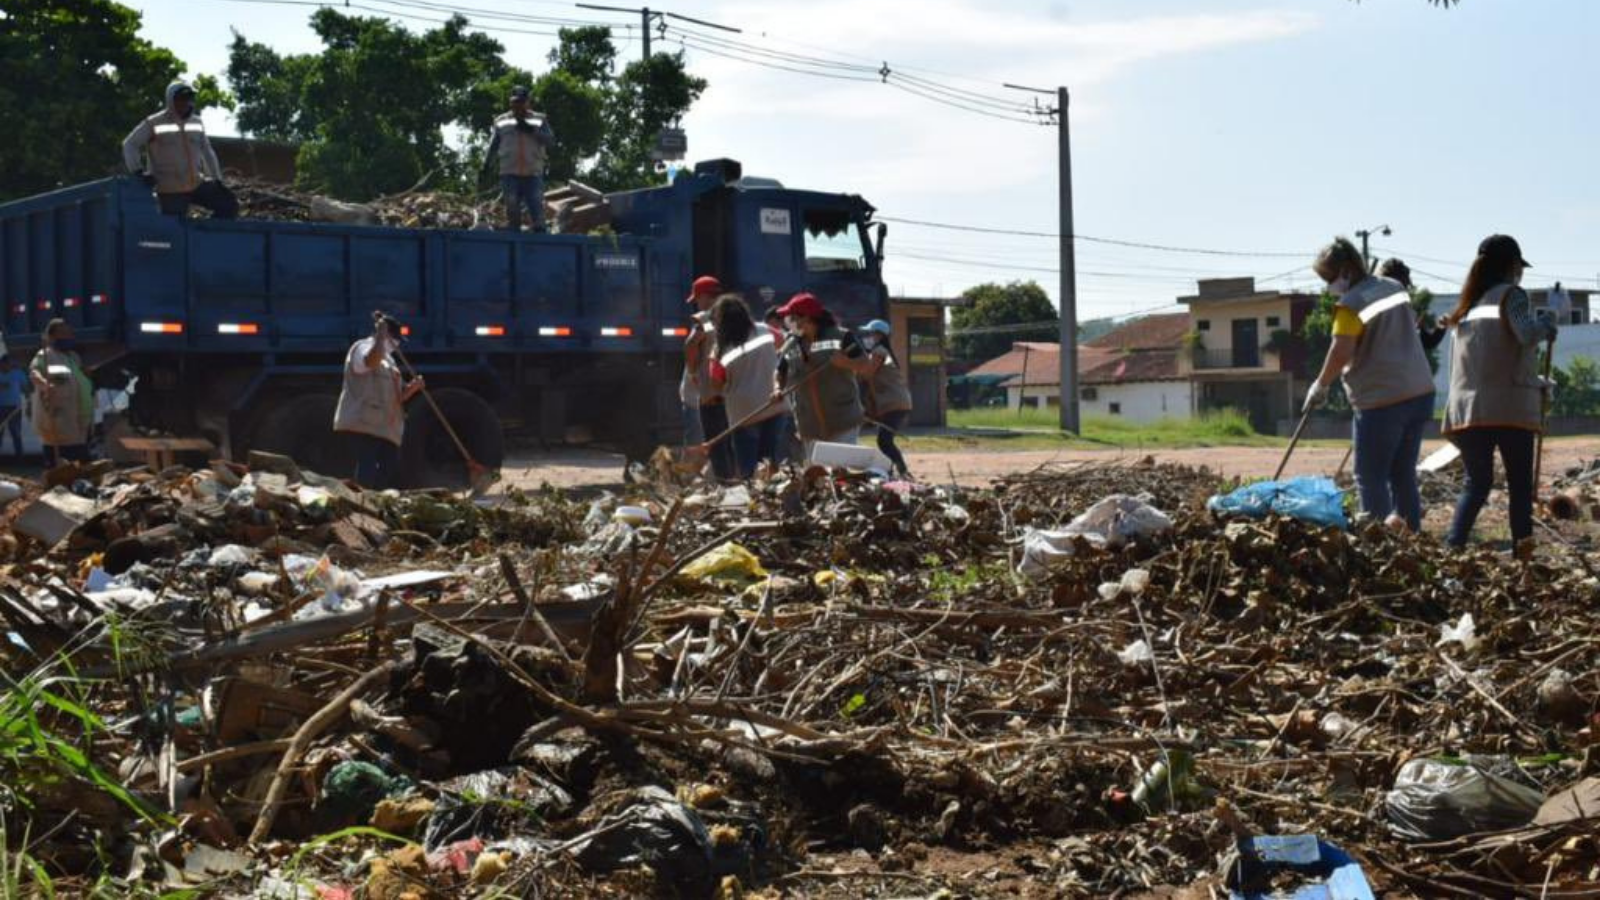 Barrens are used as landfills in Asunción